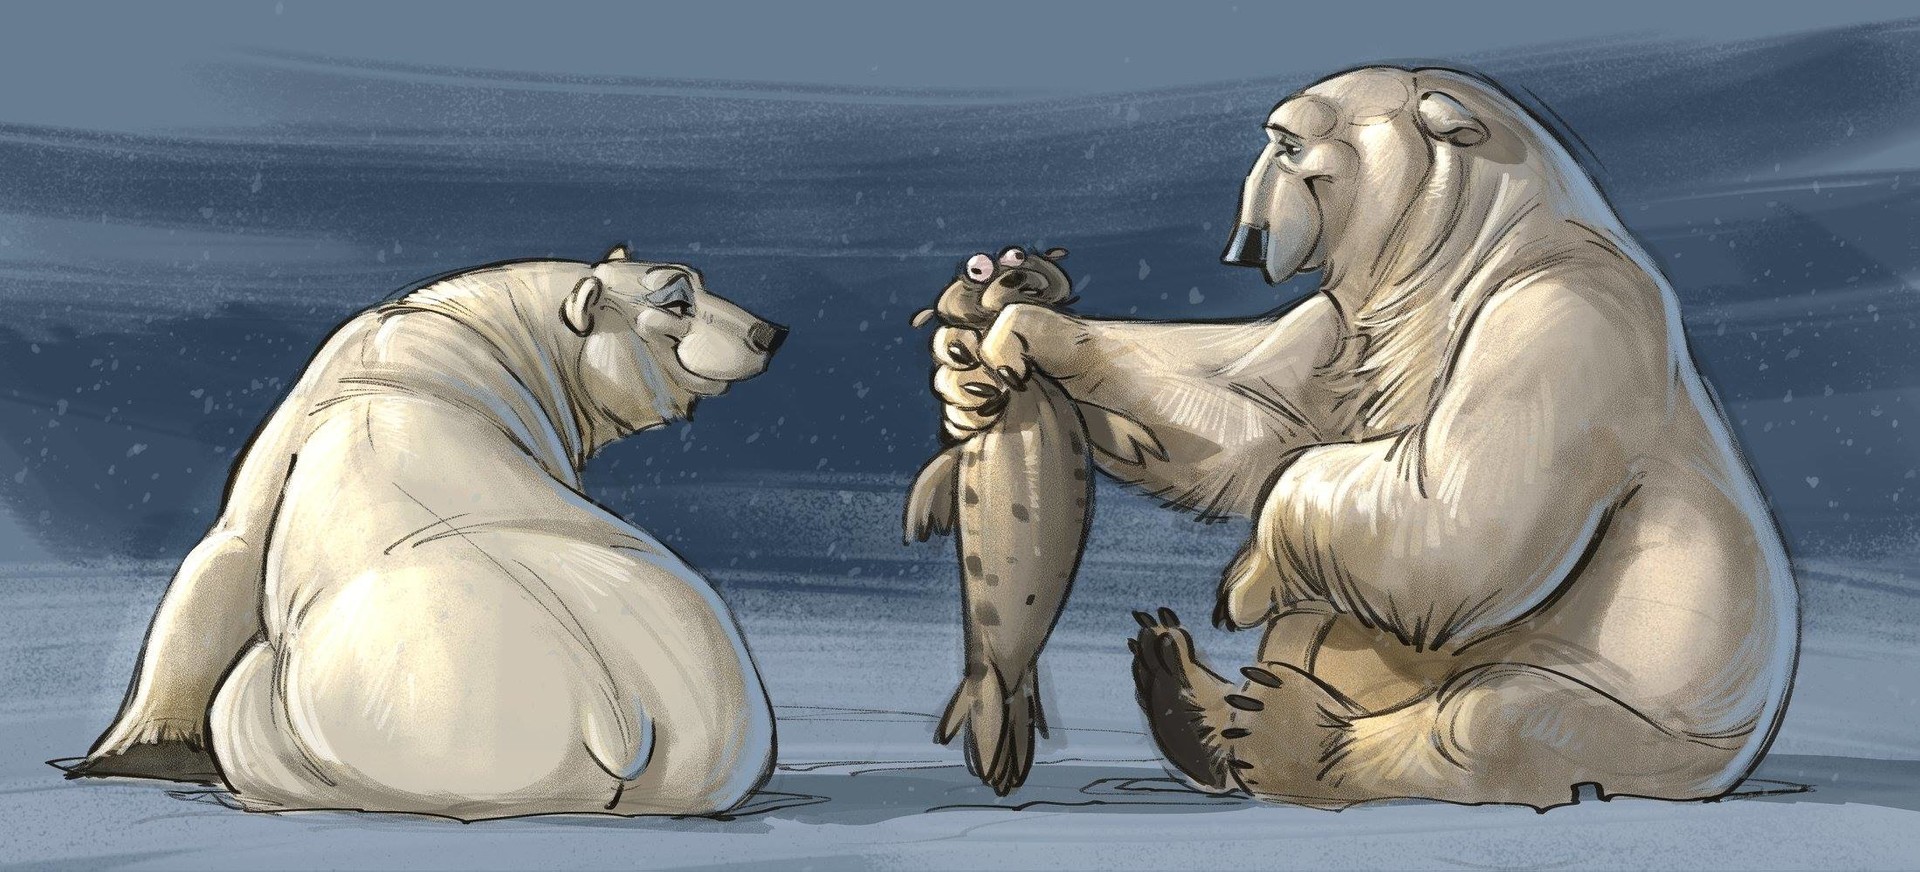 Polar bear fucks bubble butt pic